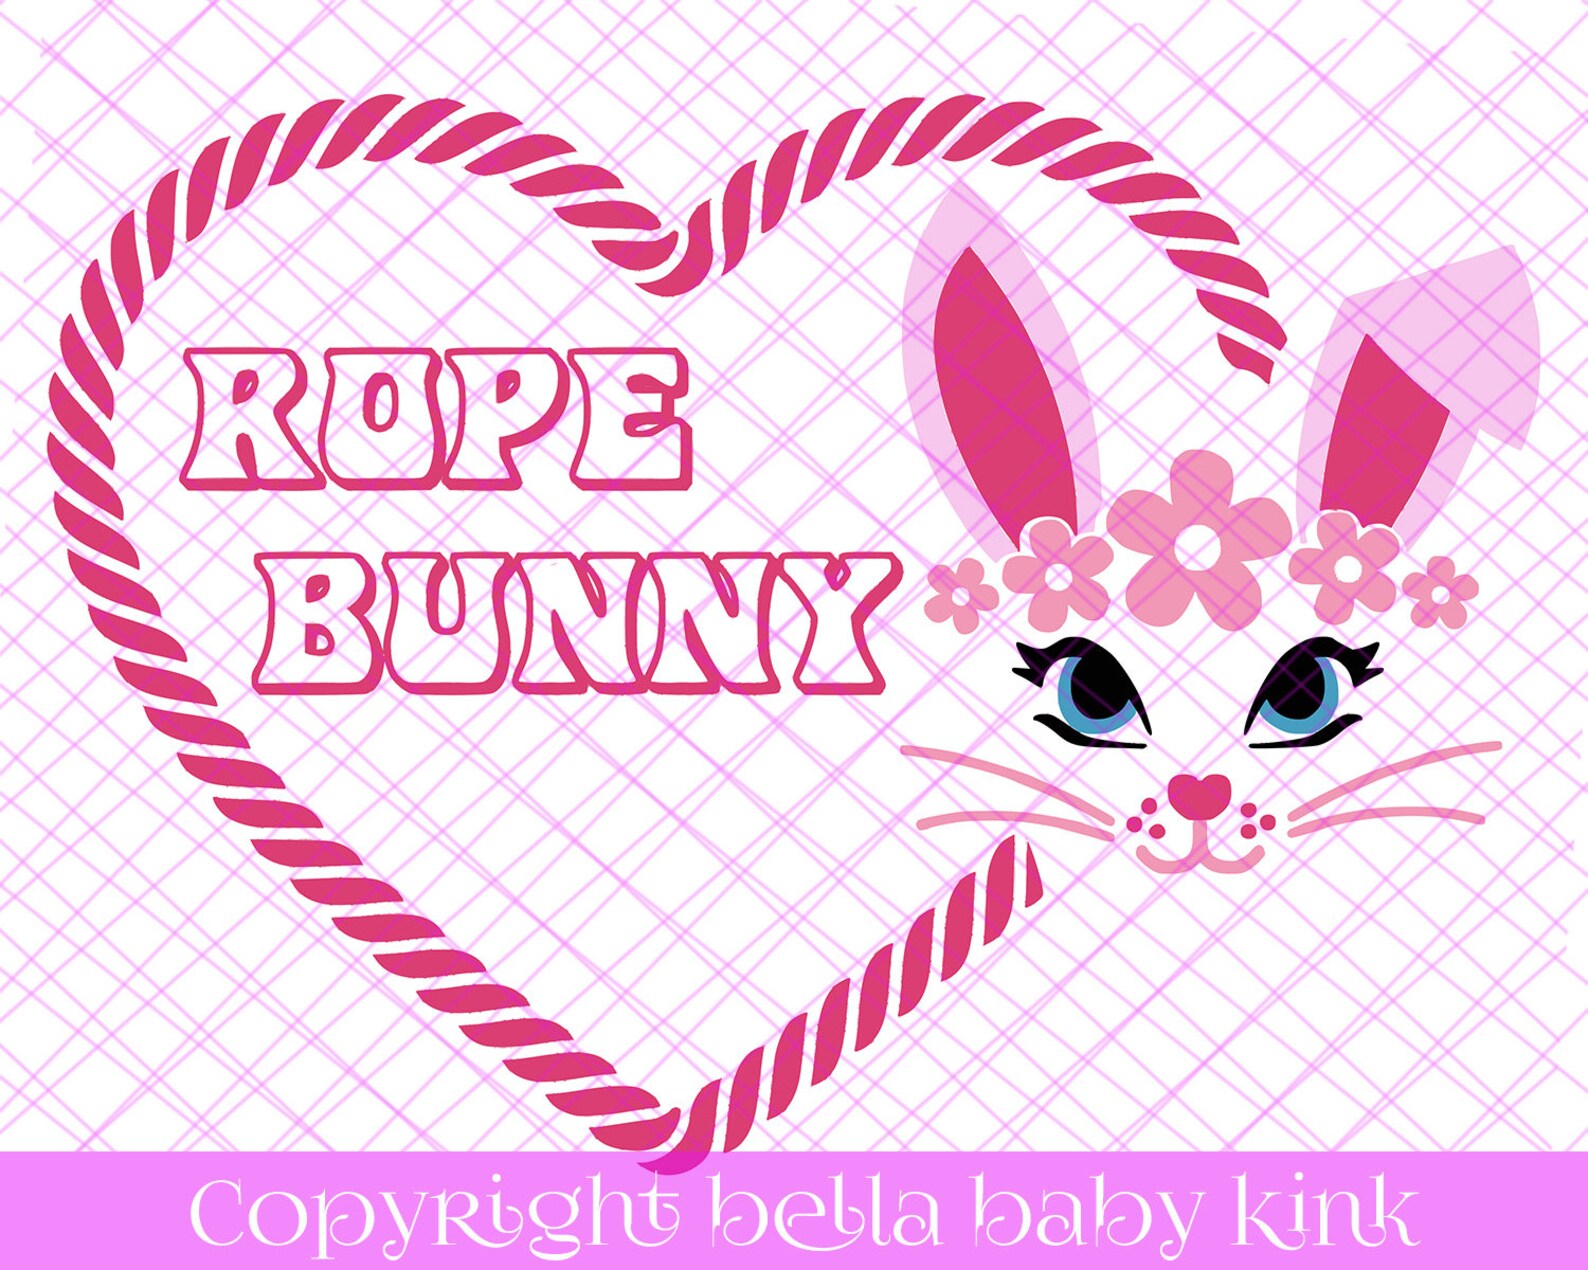 Rope bunny